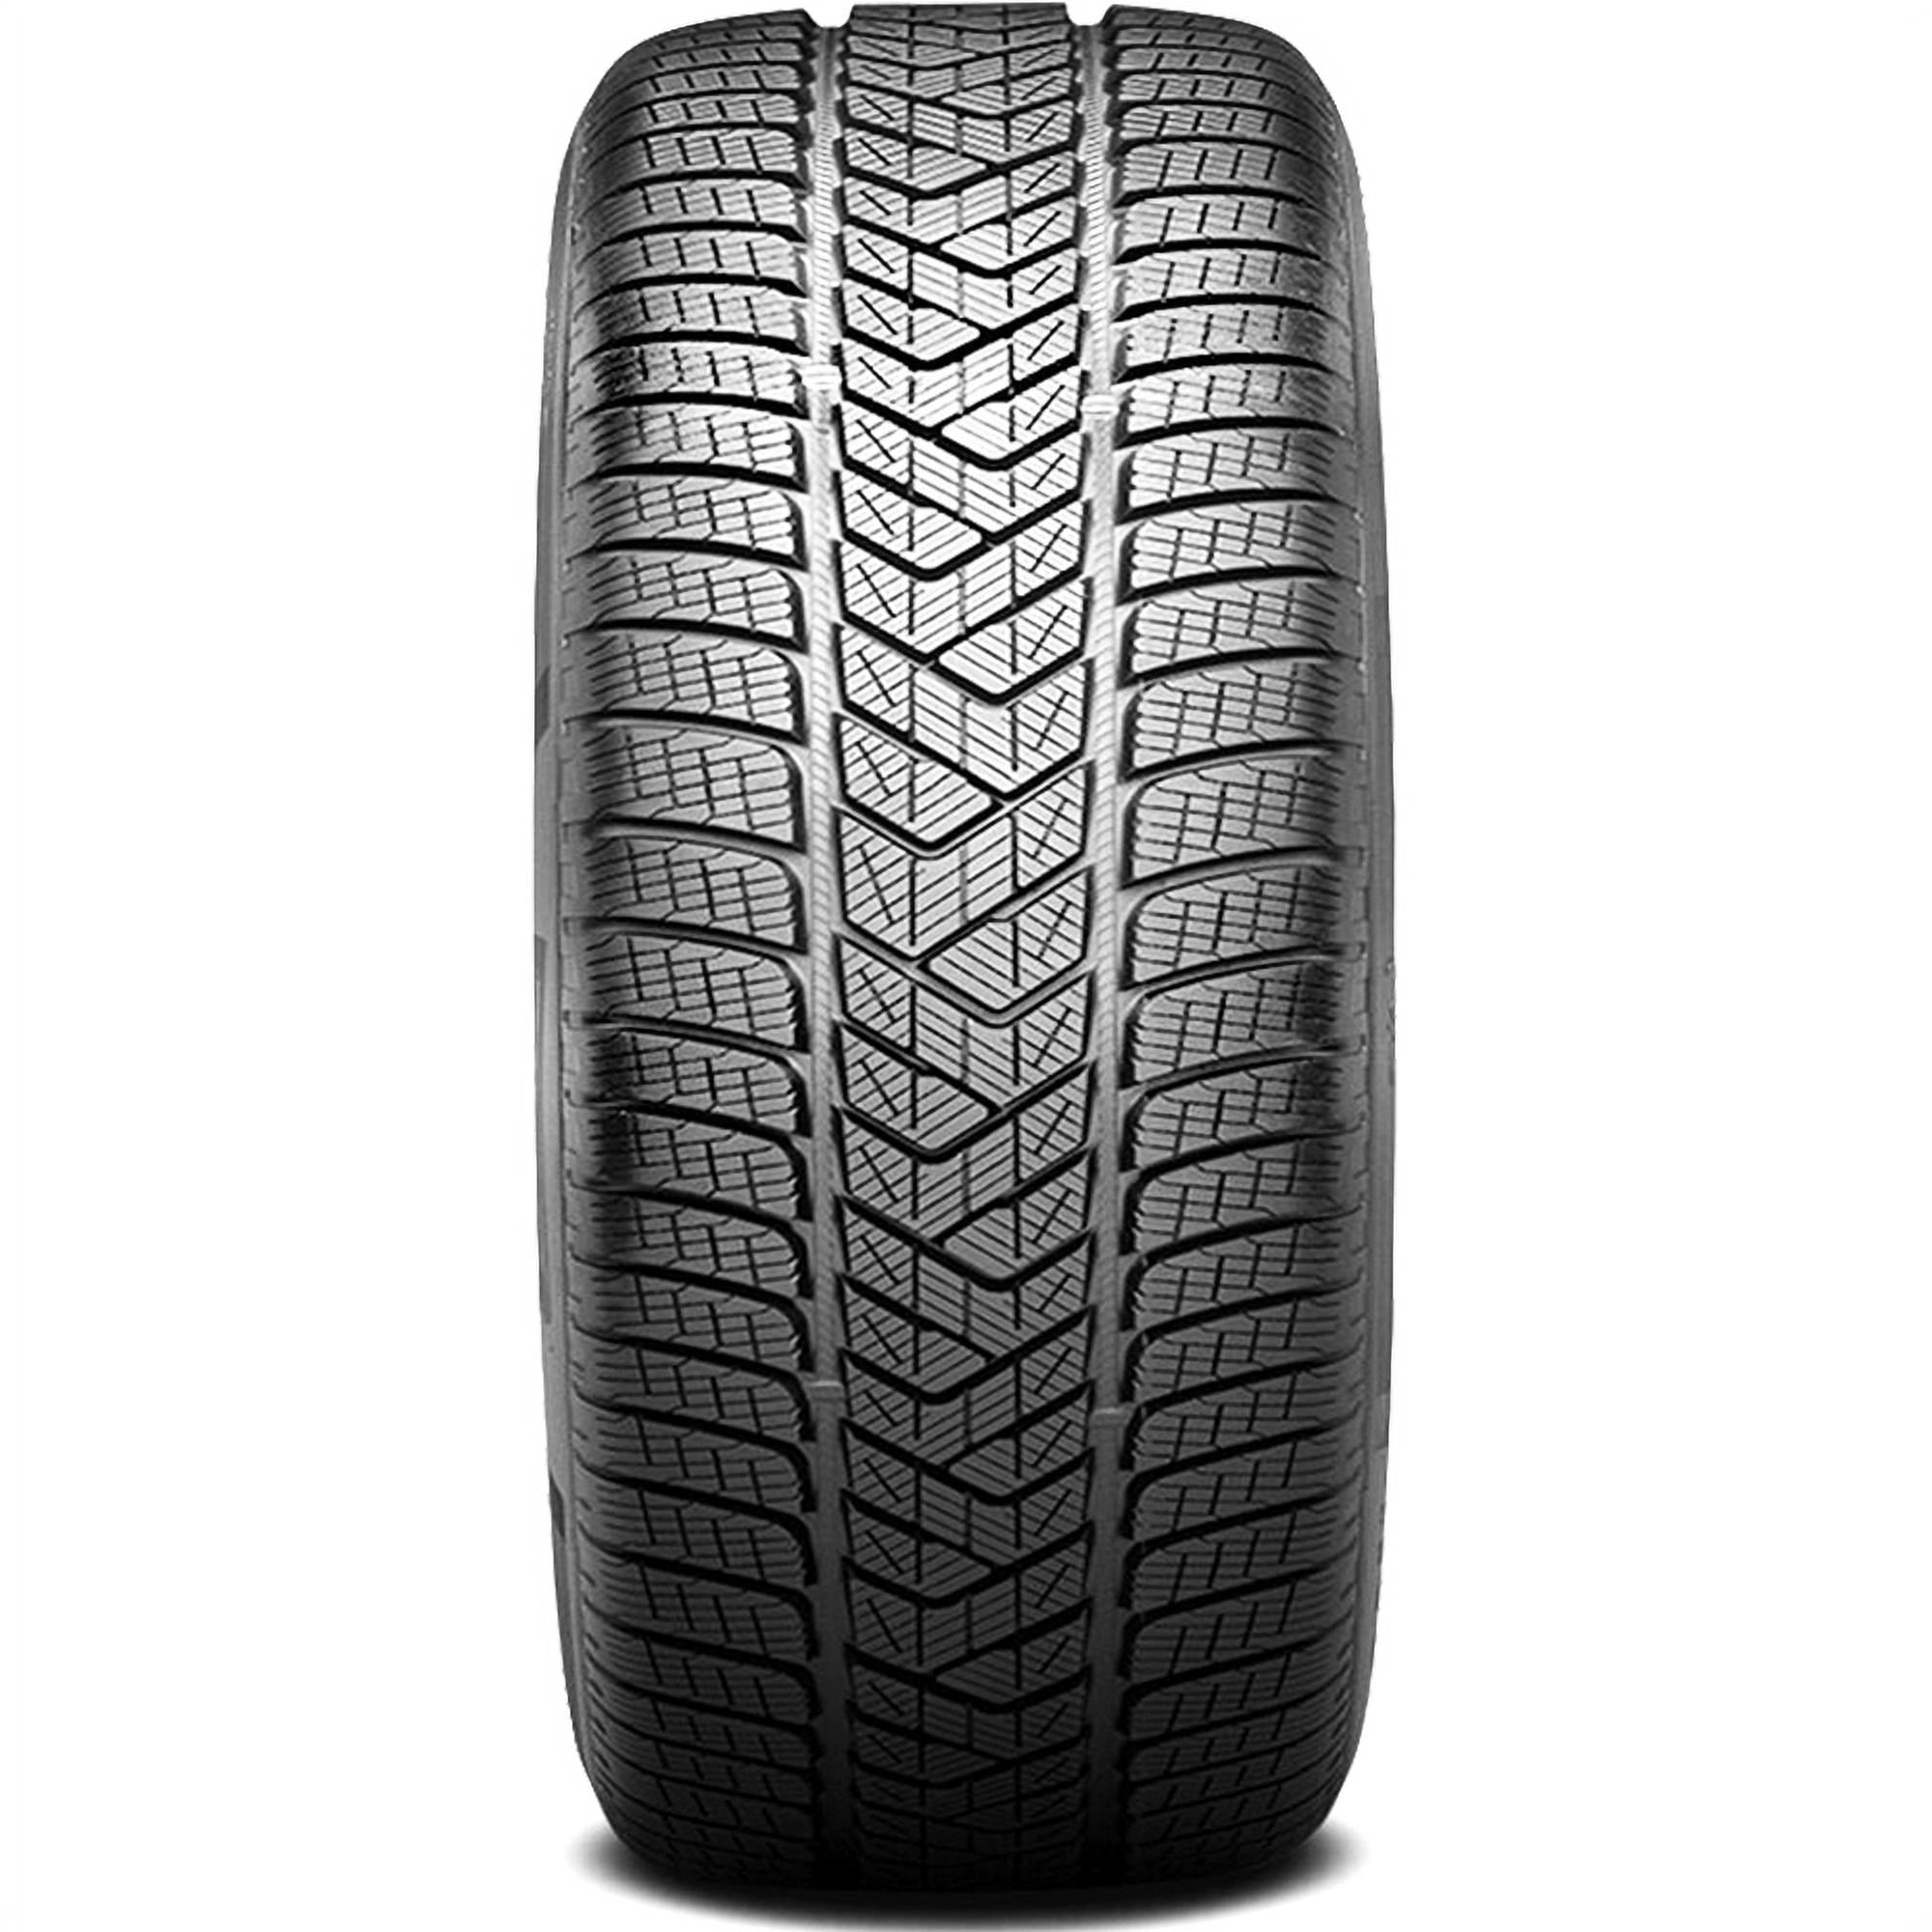 Pirelli Scorpion Winter 295/40R21 111V XL (Studless) Snow Tire